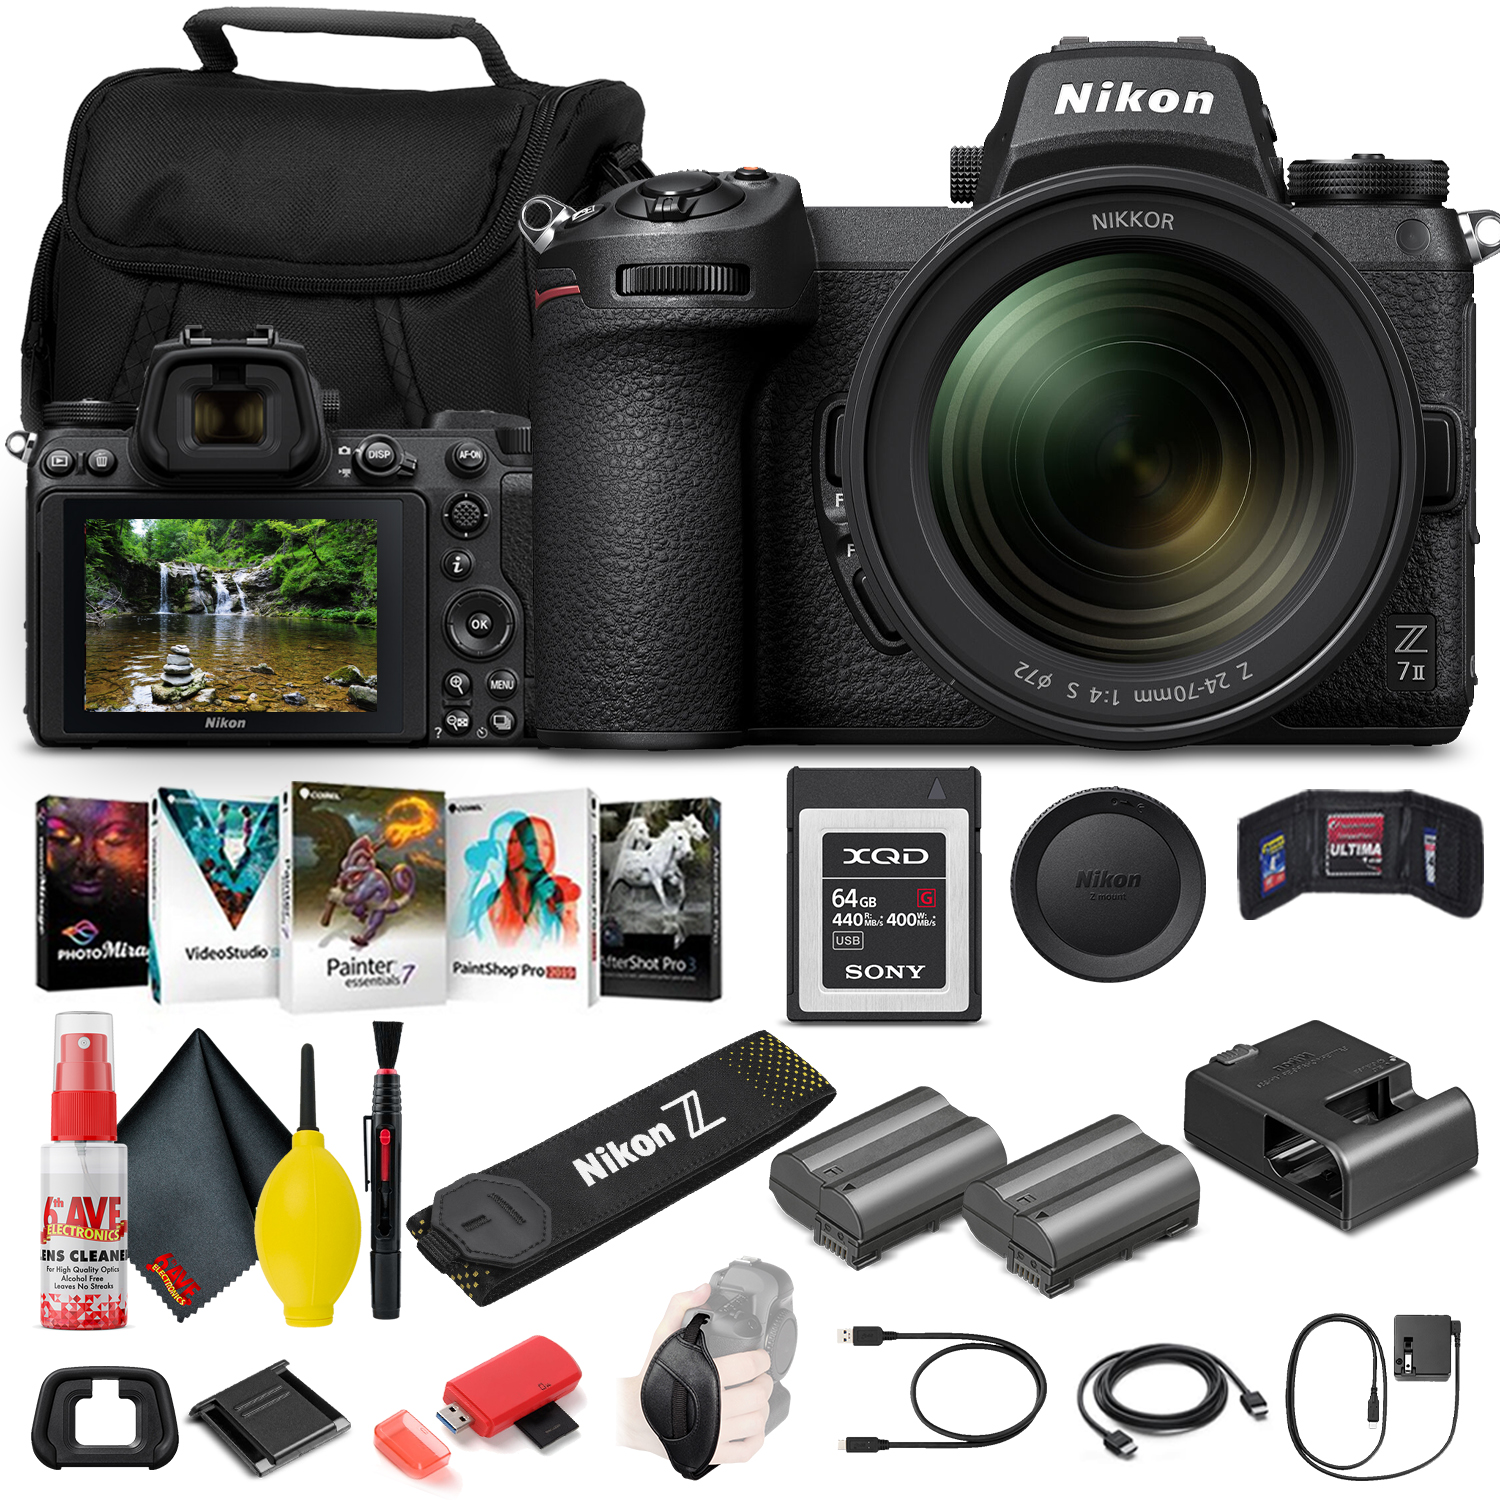 Nikon Z 7II Mirrorless Digital Camera 45.7MP with 24-70mm f/4 Lens (1656) + 64GB XQD Card + EN-EL15c Battery + Corel Photo Software + Case + HDMI Cable + Card Reader + More - International Model - image 1 of 7